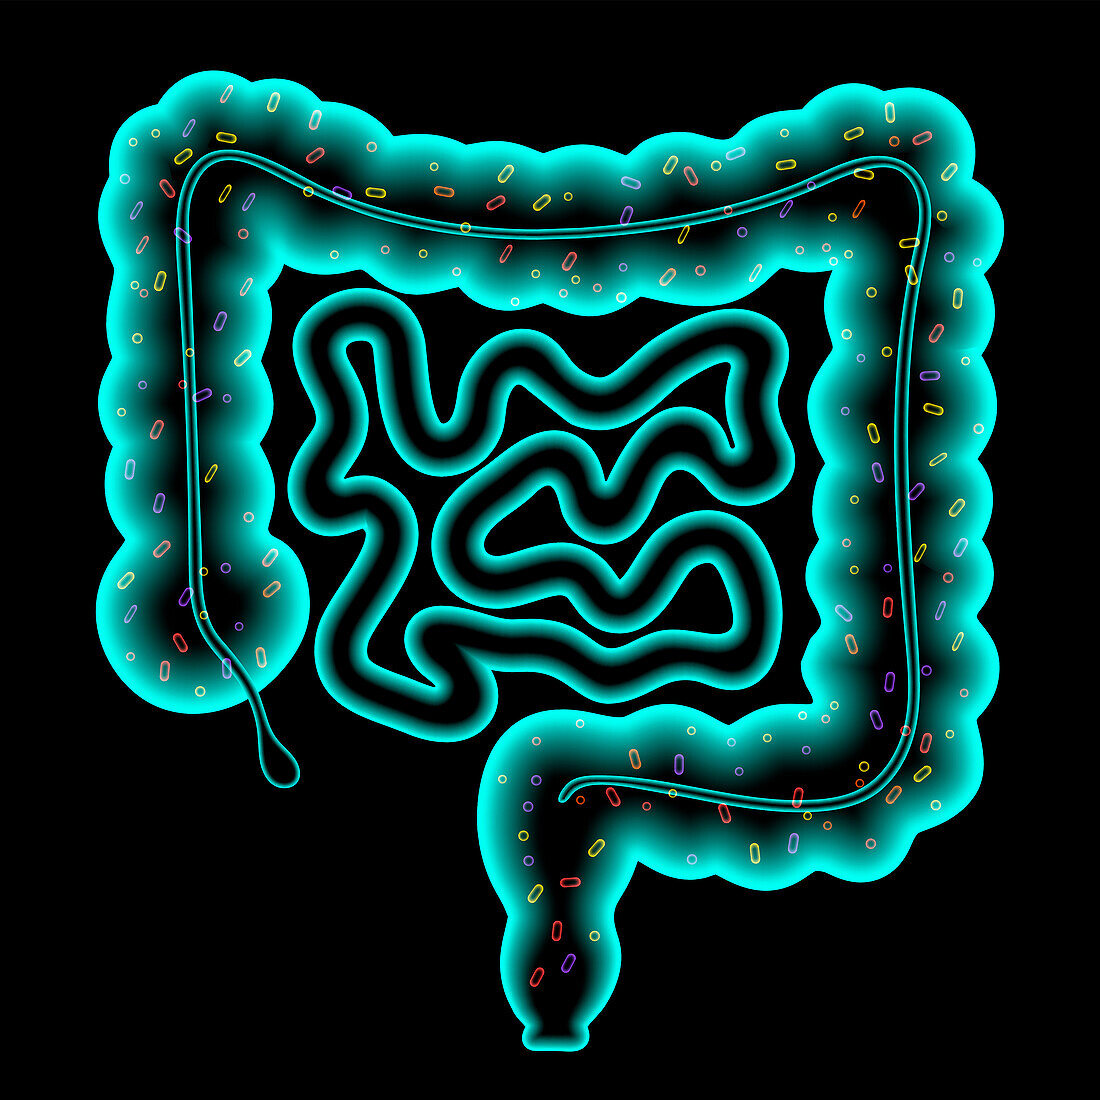 Gut microbiome, illustration